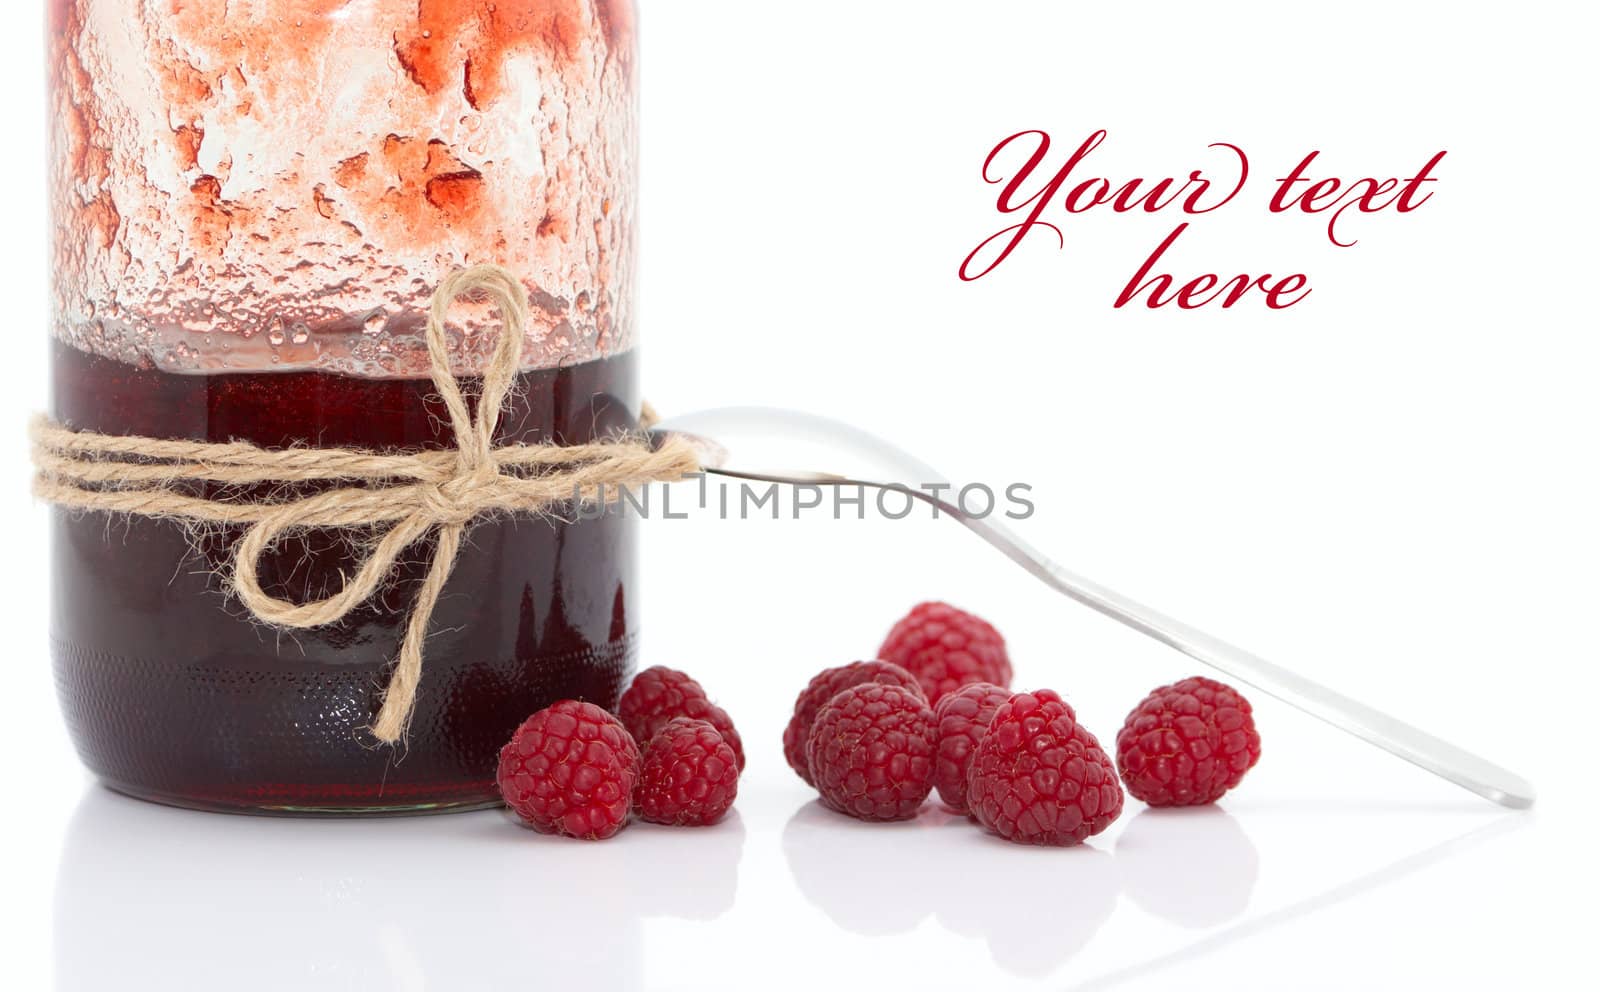 Jam with raspberries by Olinkau